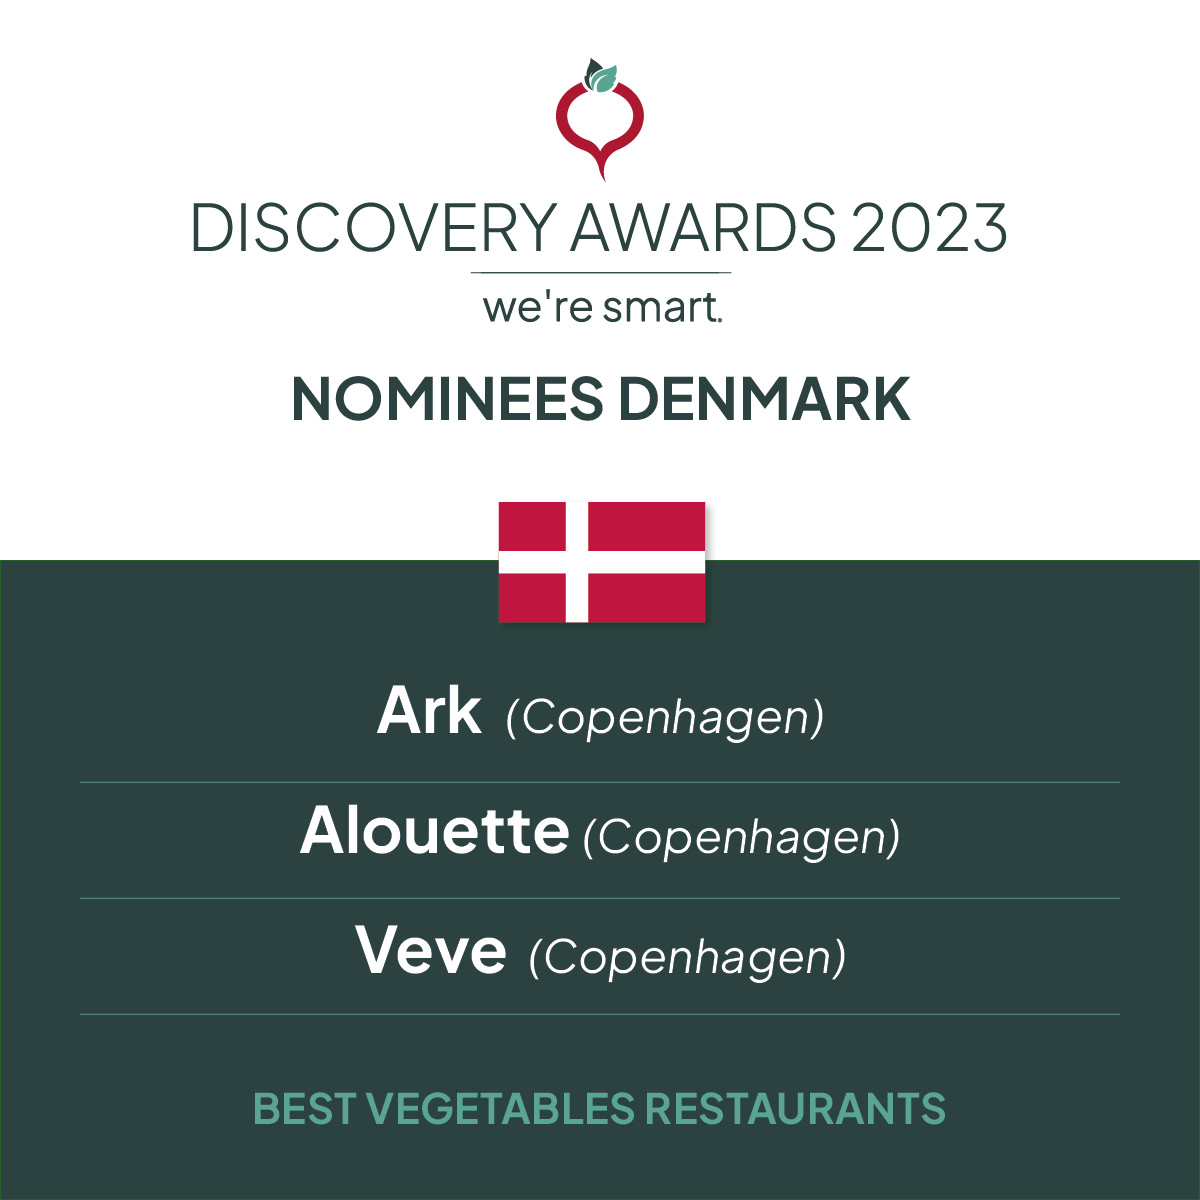 Nominees Denmark